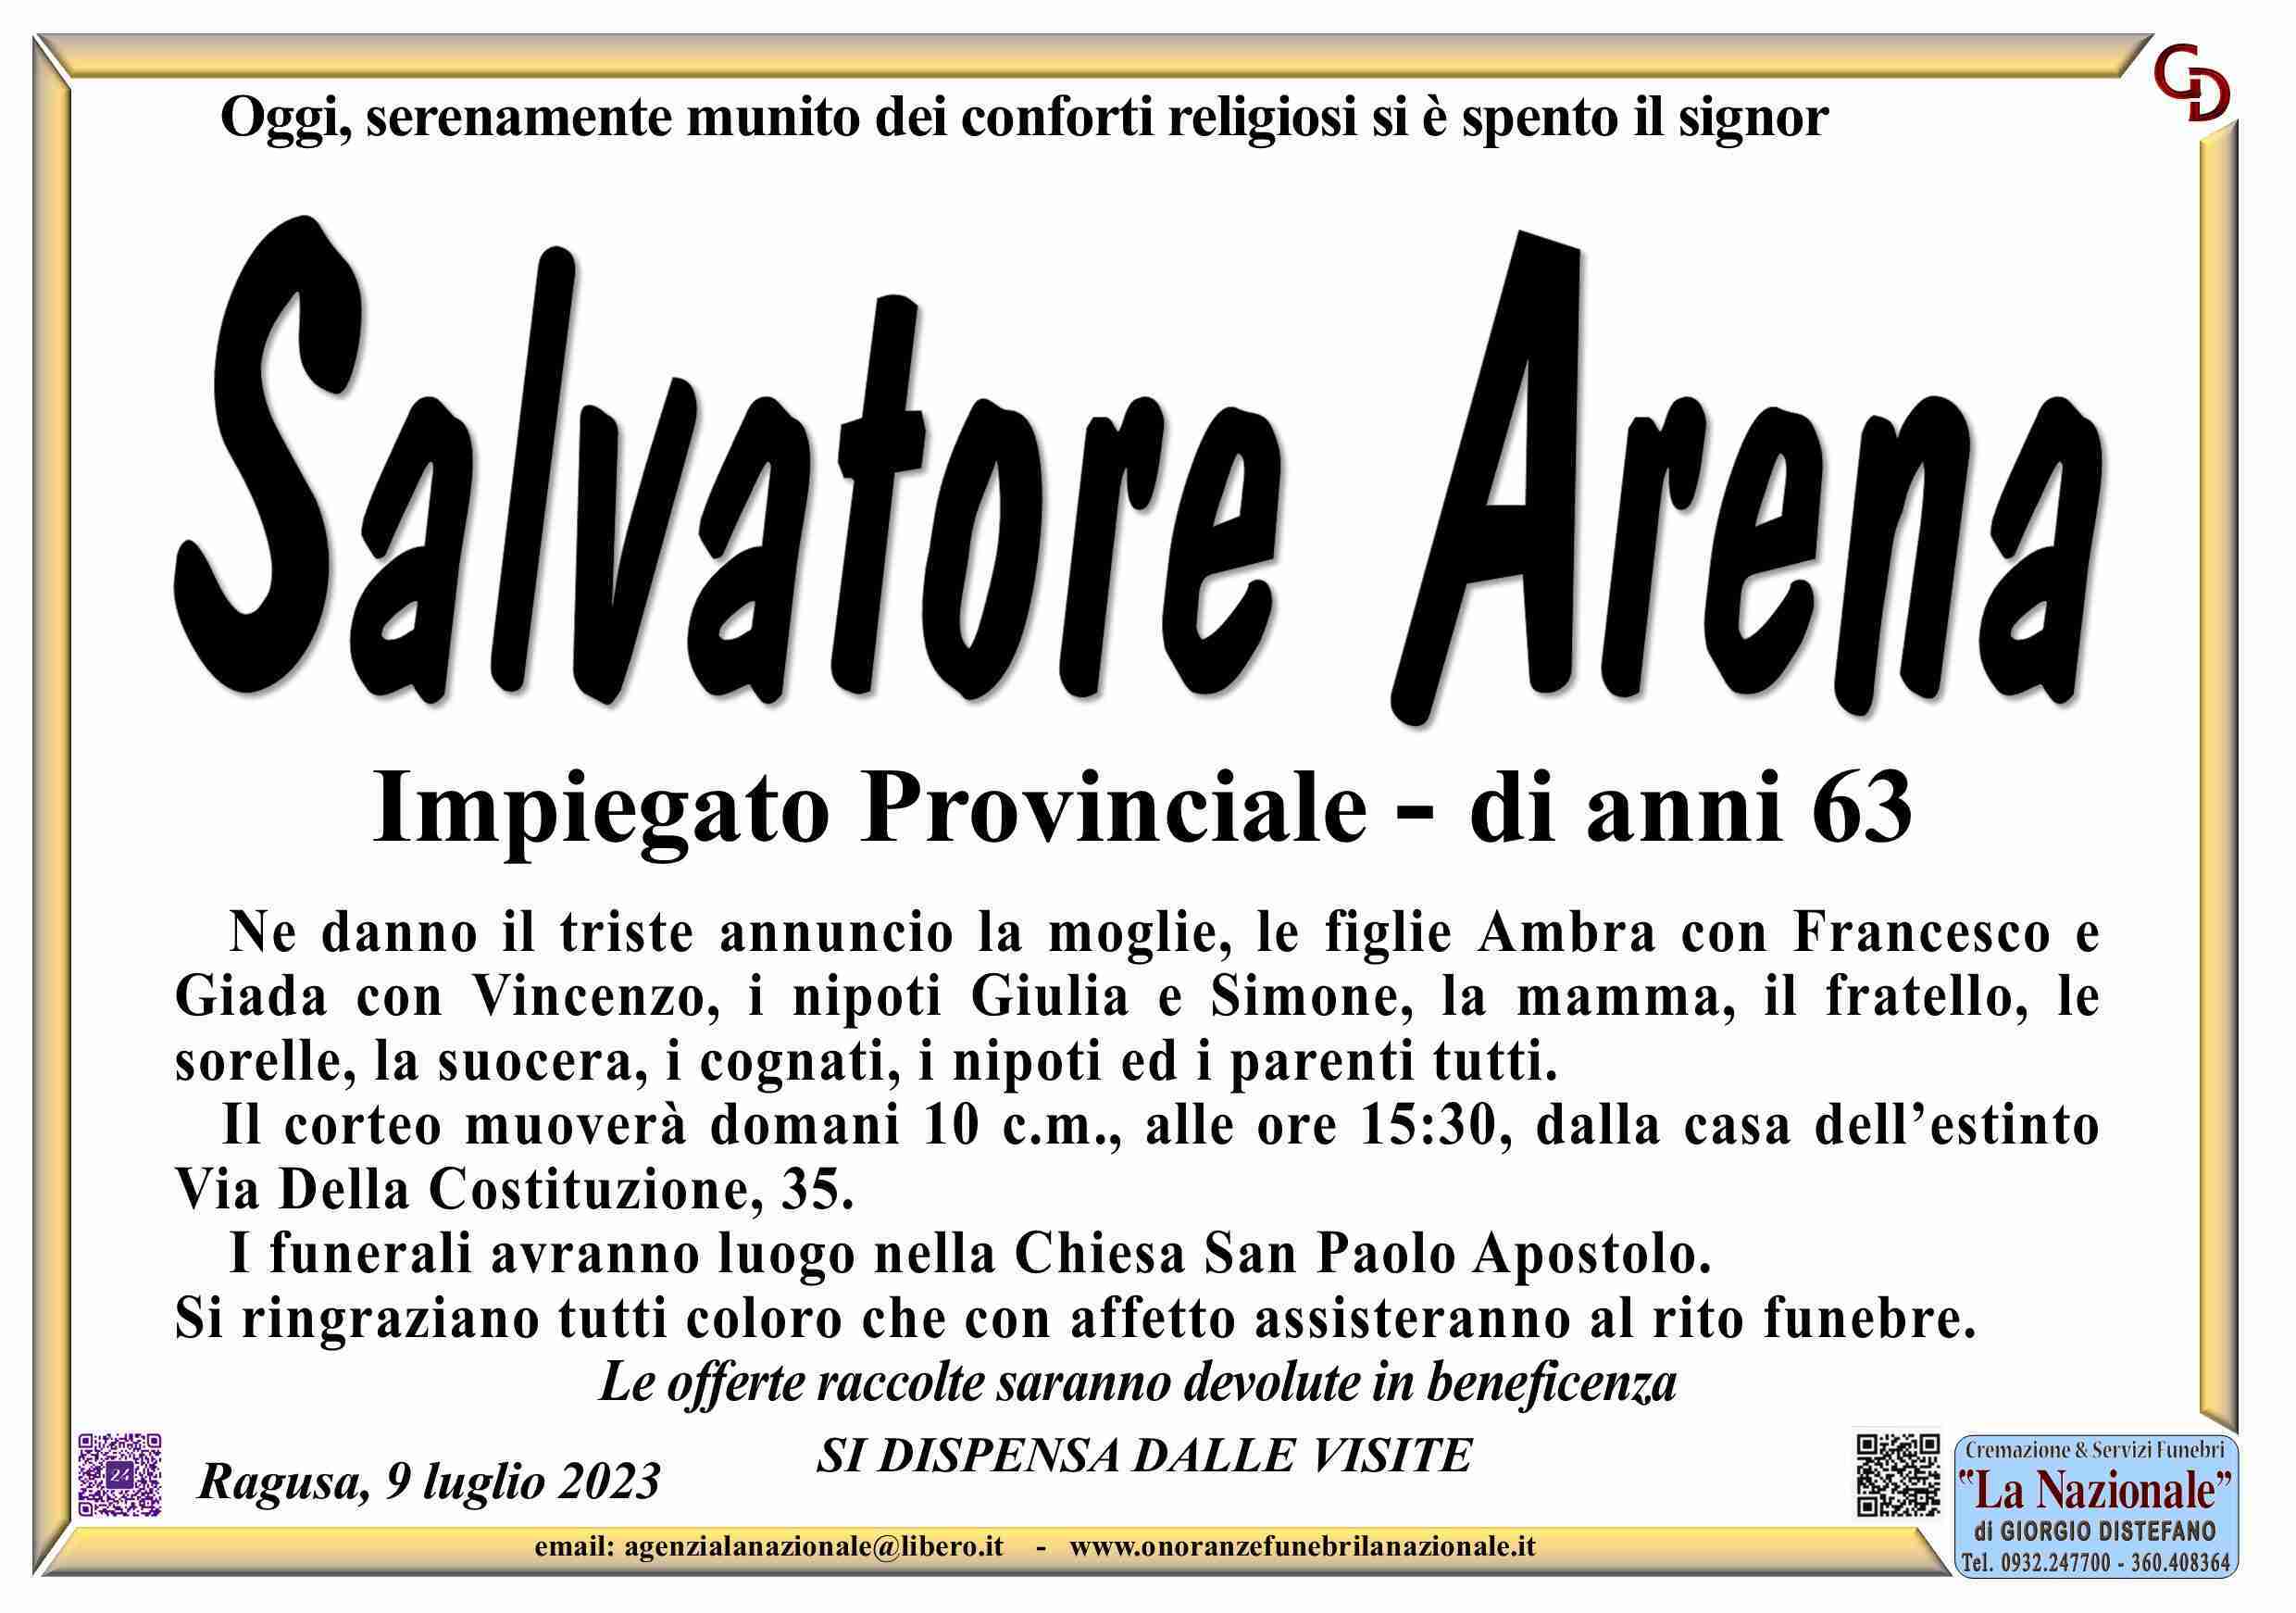 Salvatore Arena